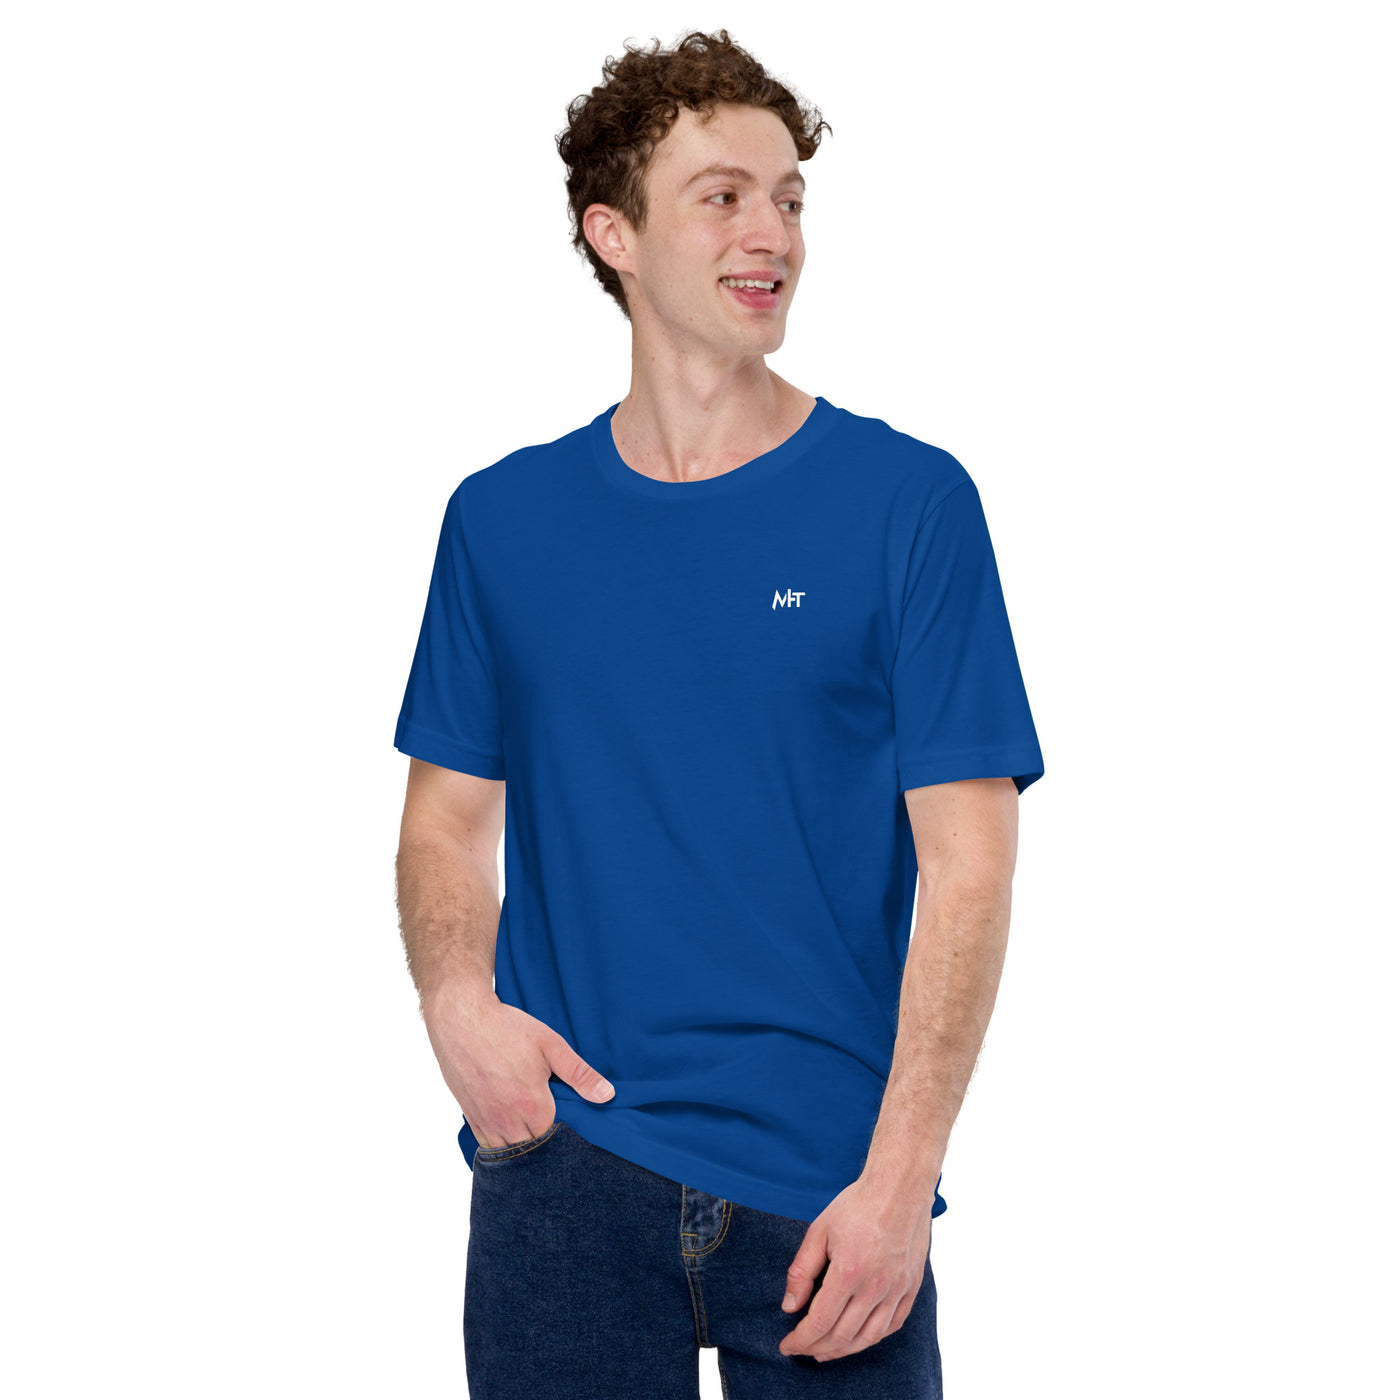 Programmer: Def blue Unisex t-shirt  ( Back Print )